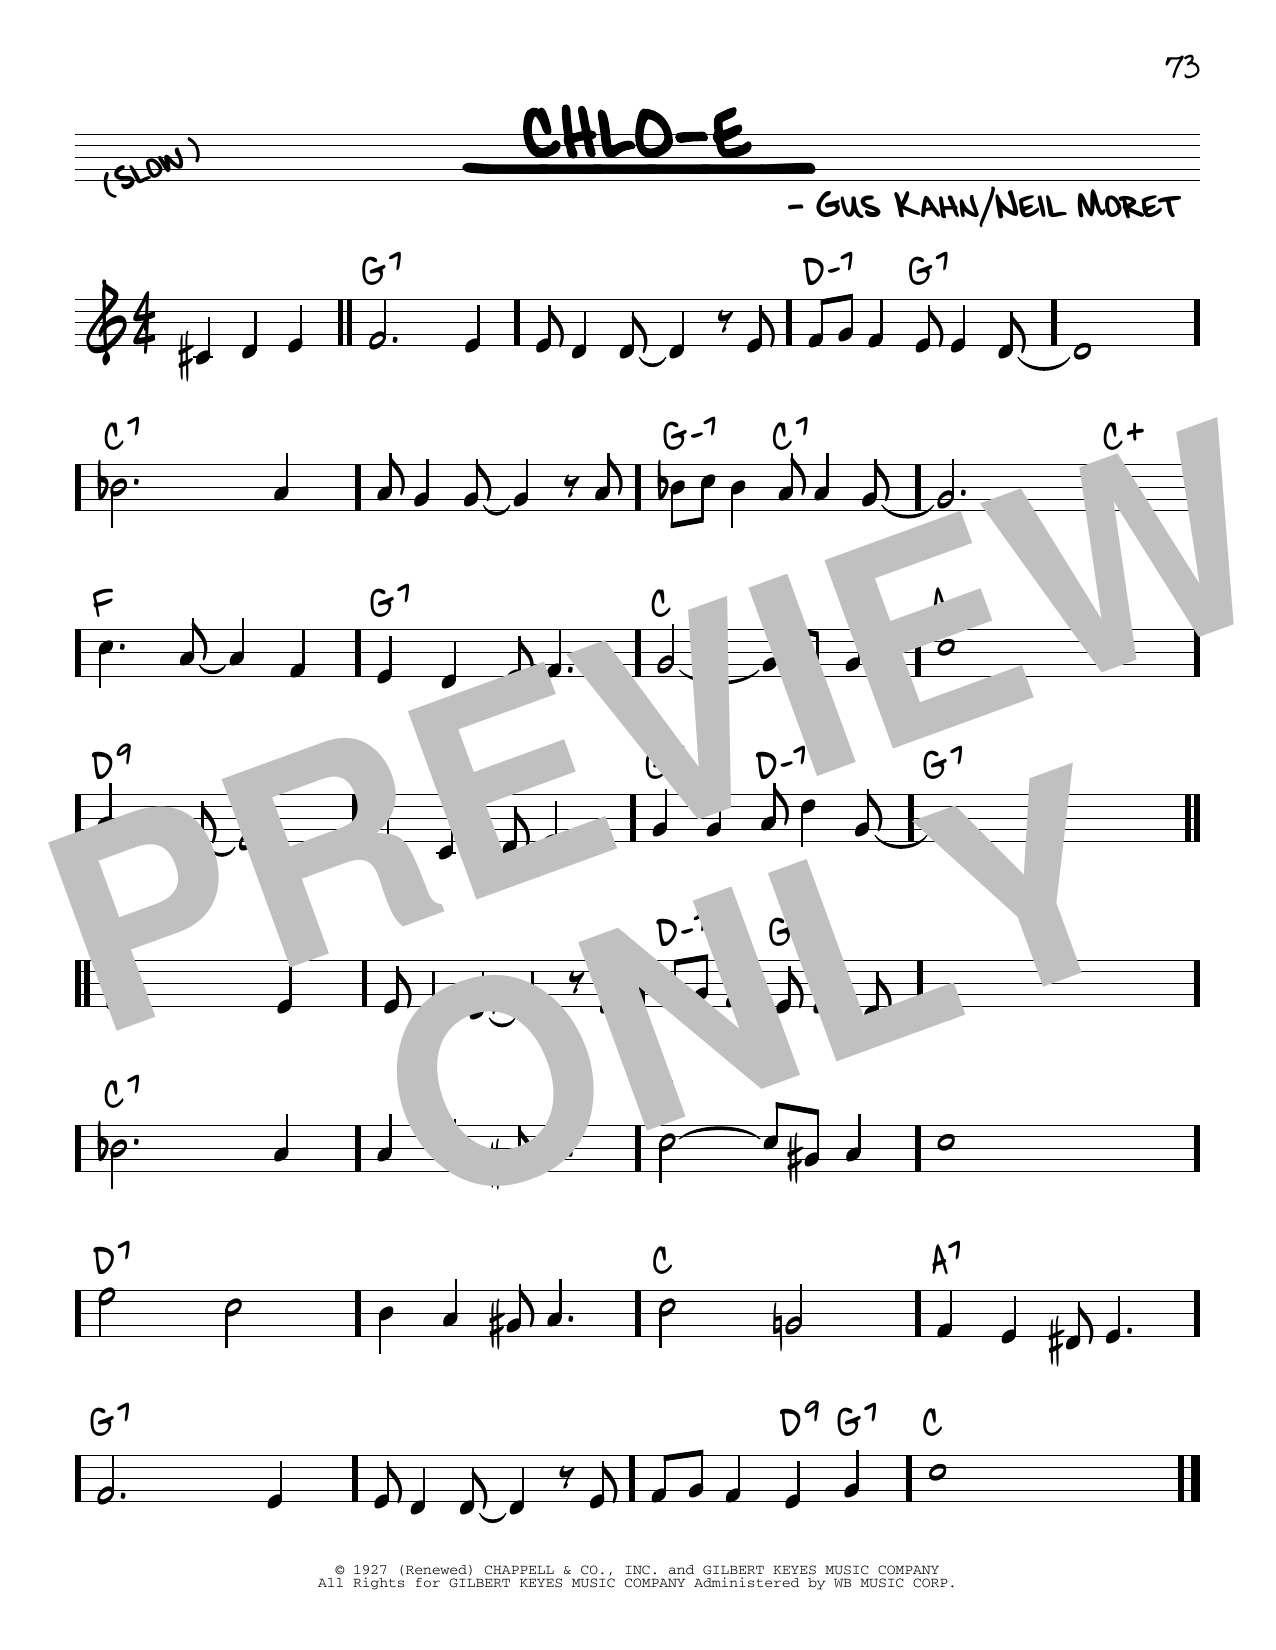 Download Gus Kahn Chlo-e sheet music and printable PDF score & Jazz music notes